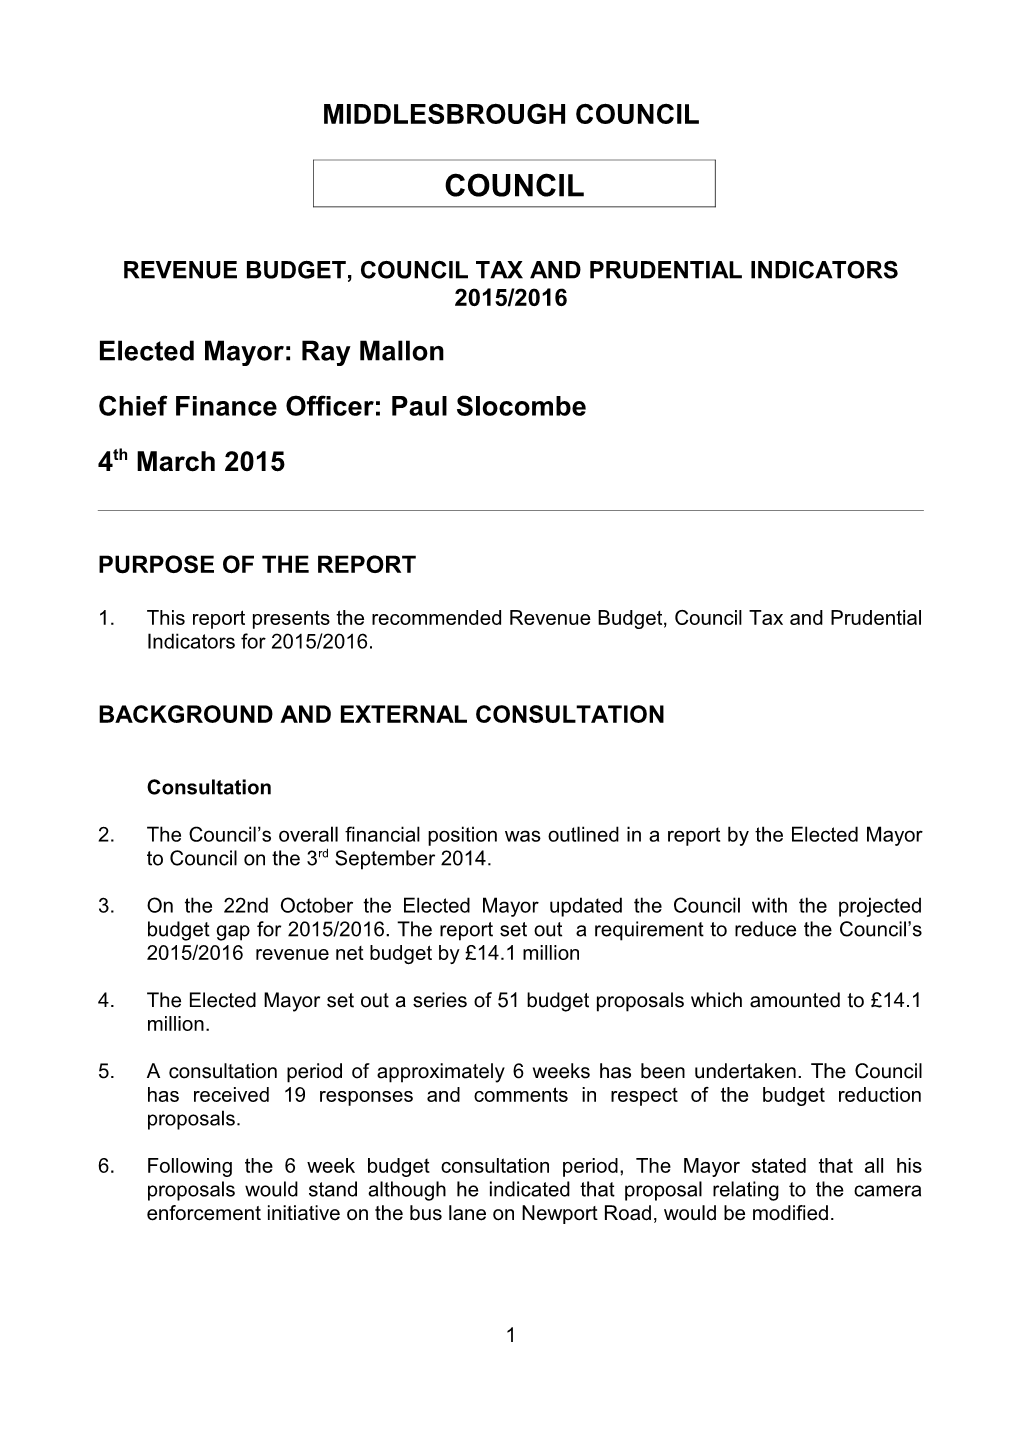 REVENUE BUDGET, Council Tax and Prudential Indicators 2015/2016